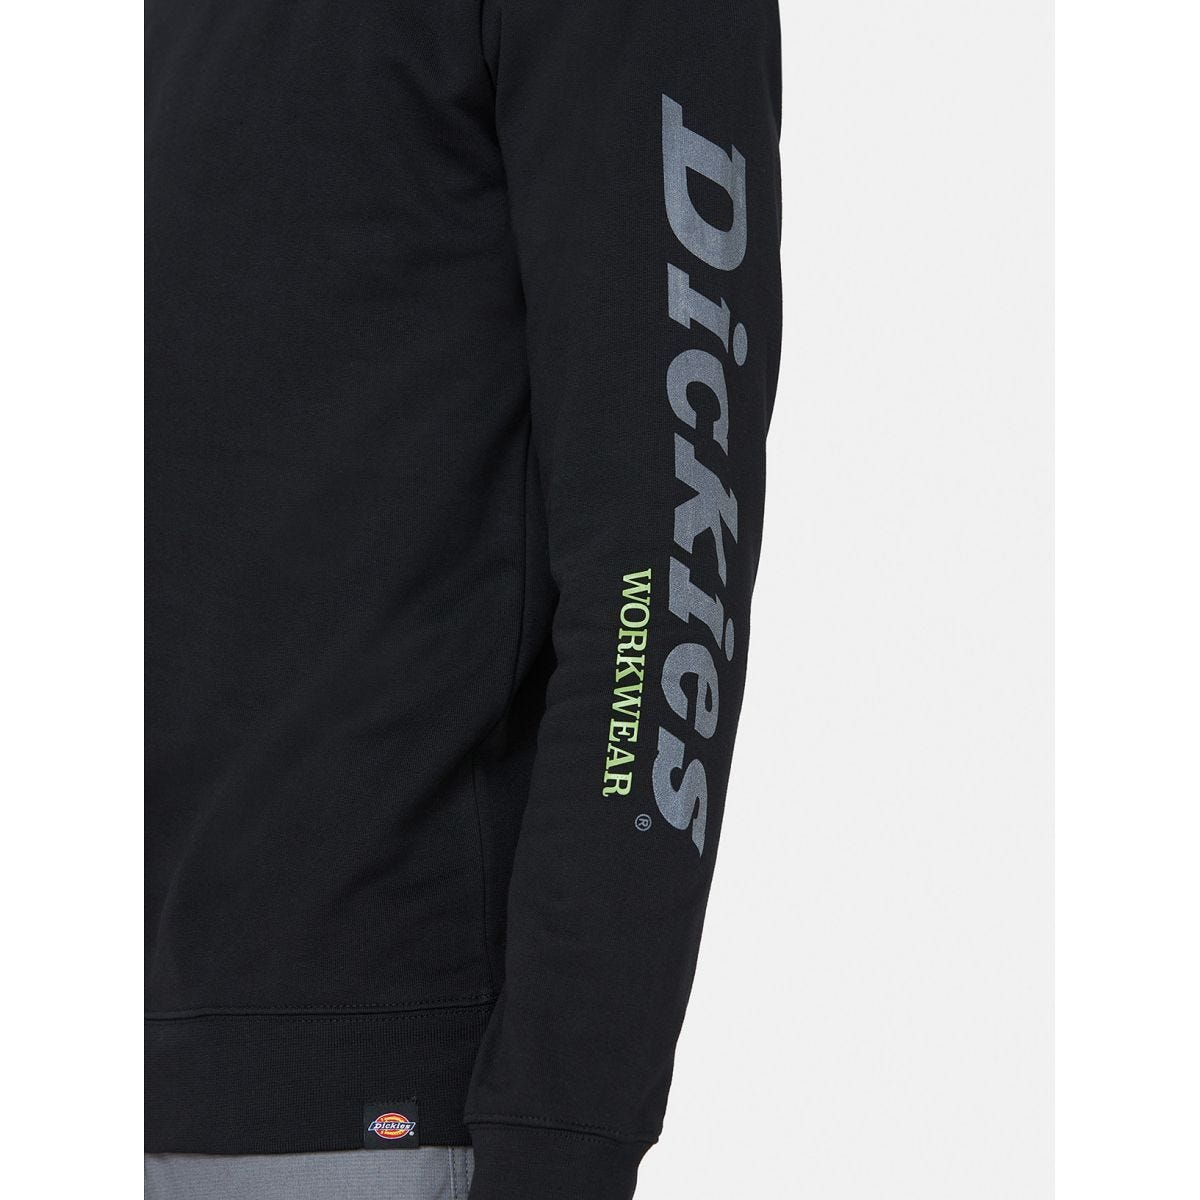 Sweat-shirt imprimé Okemo Noir - Dickies - Taille S 4